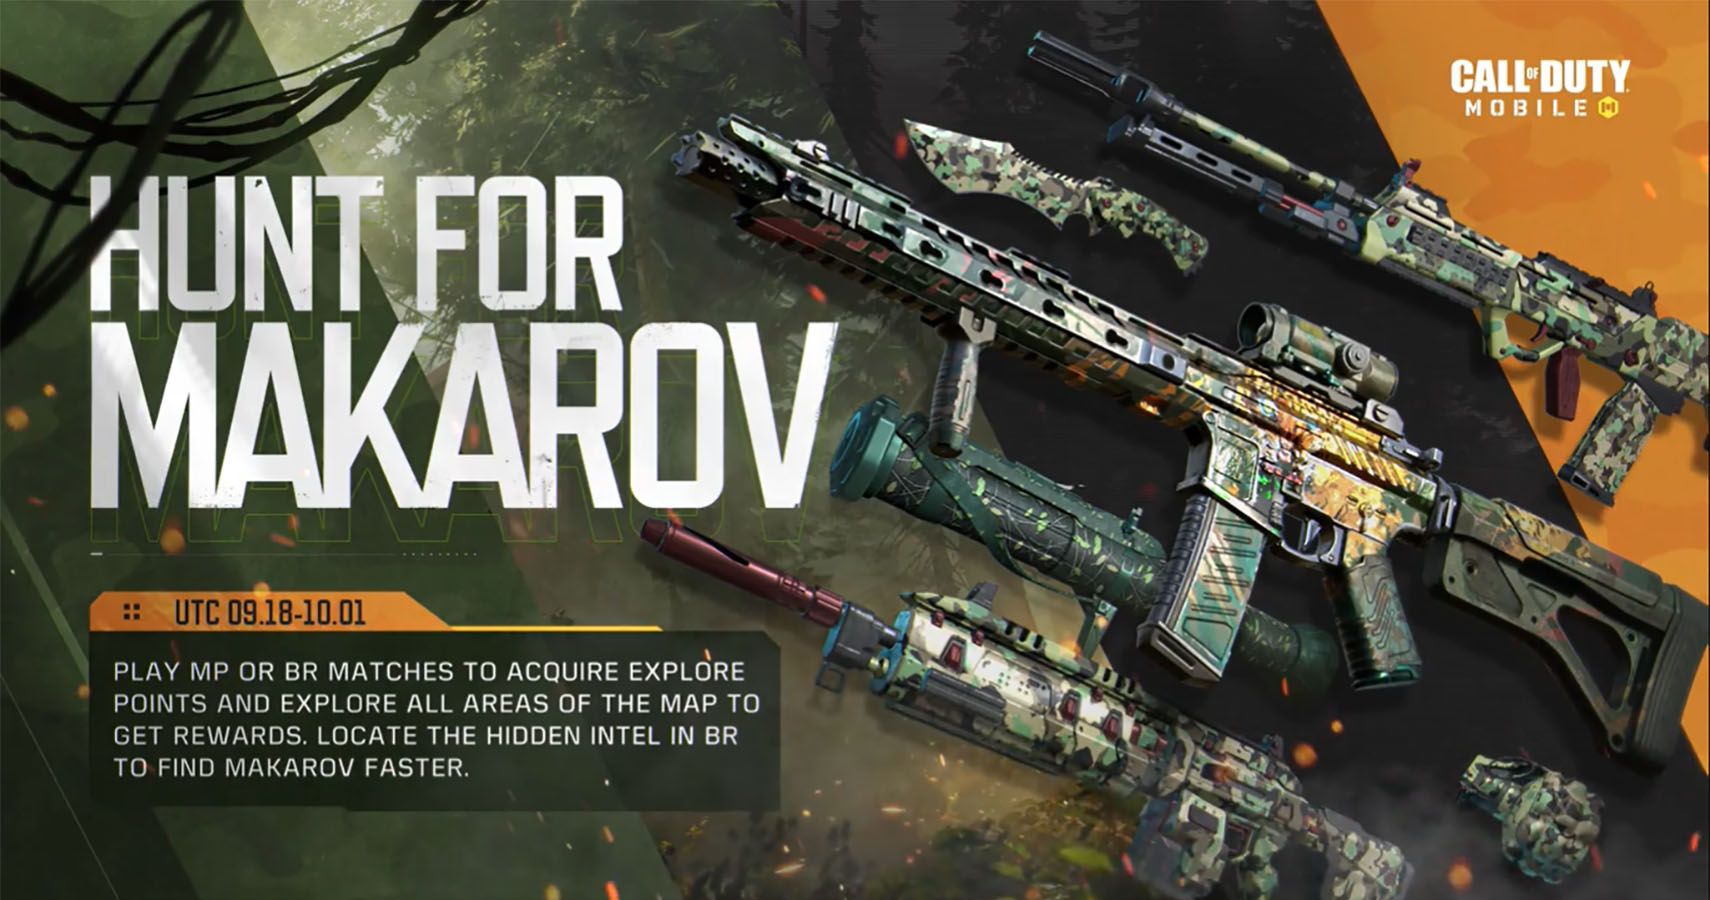 The Hunt for Makarov event promotional image.